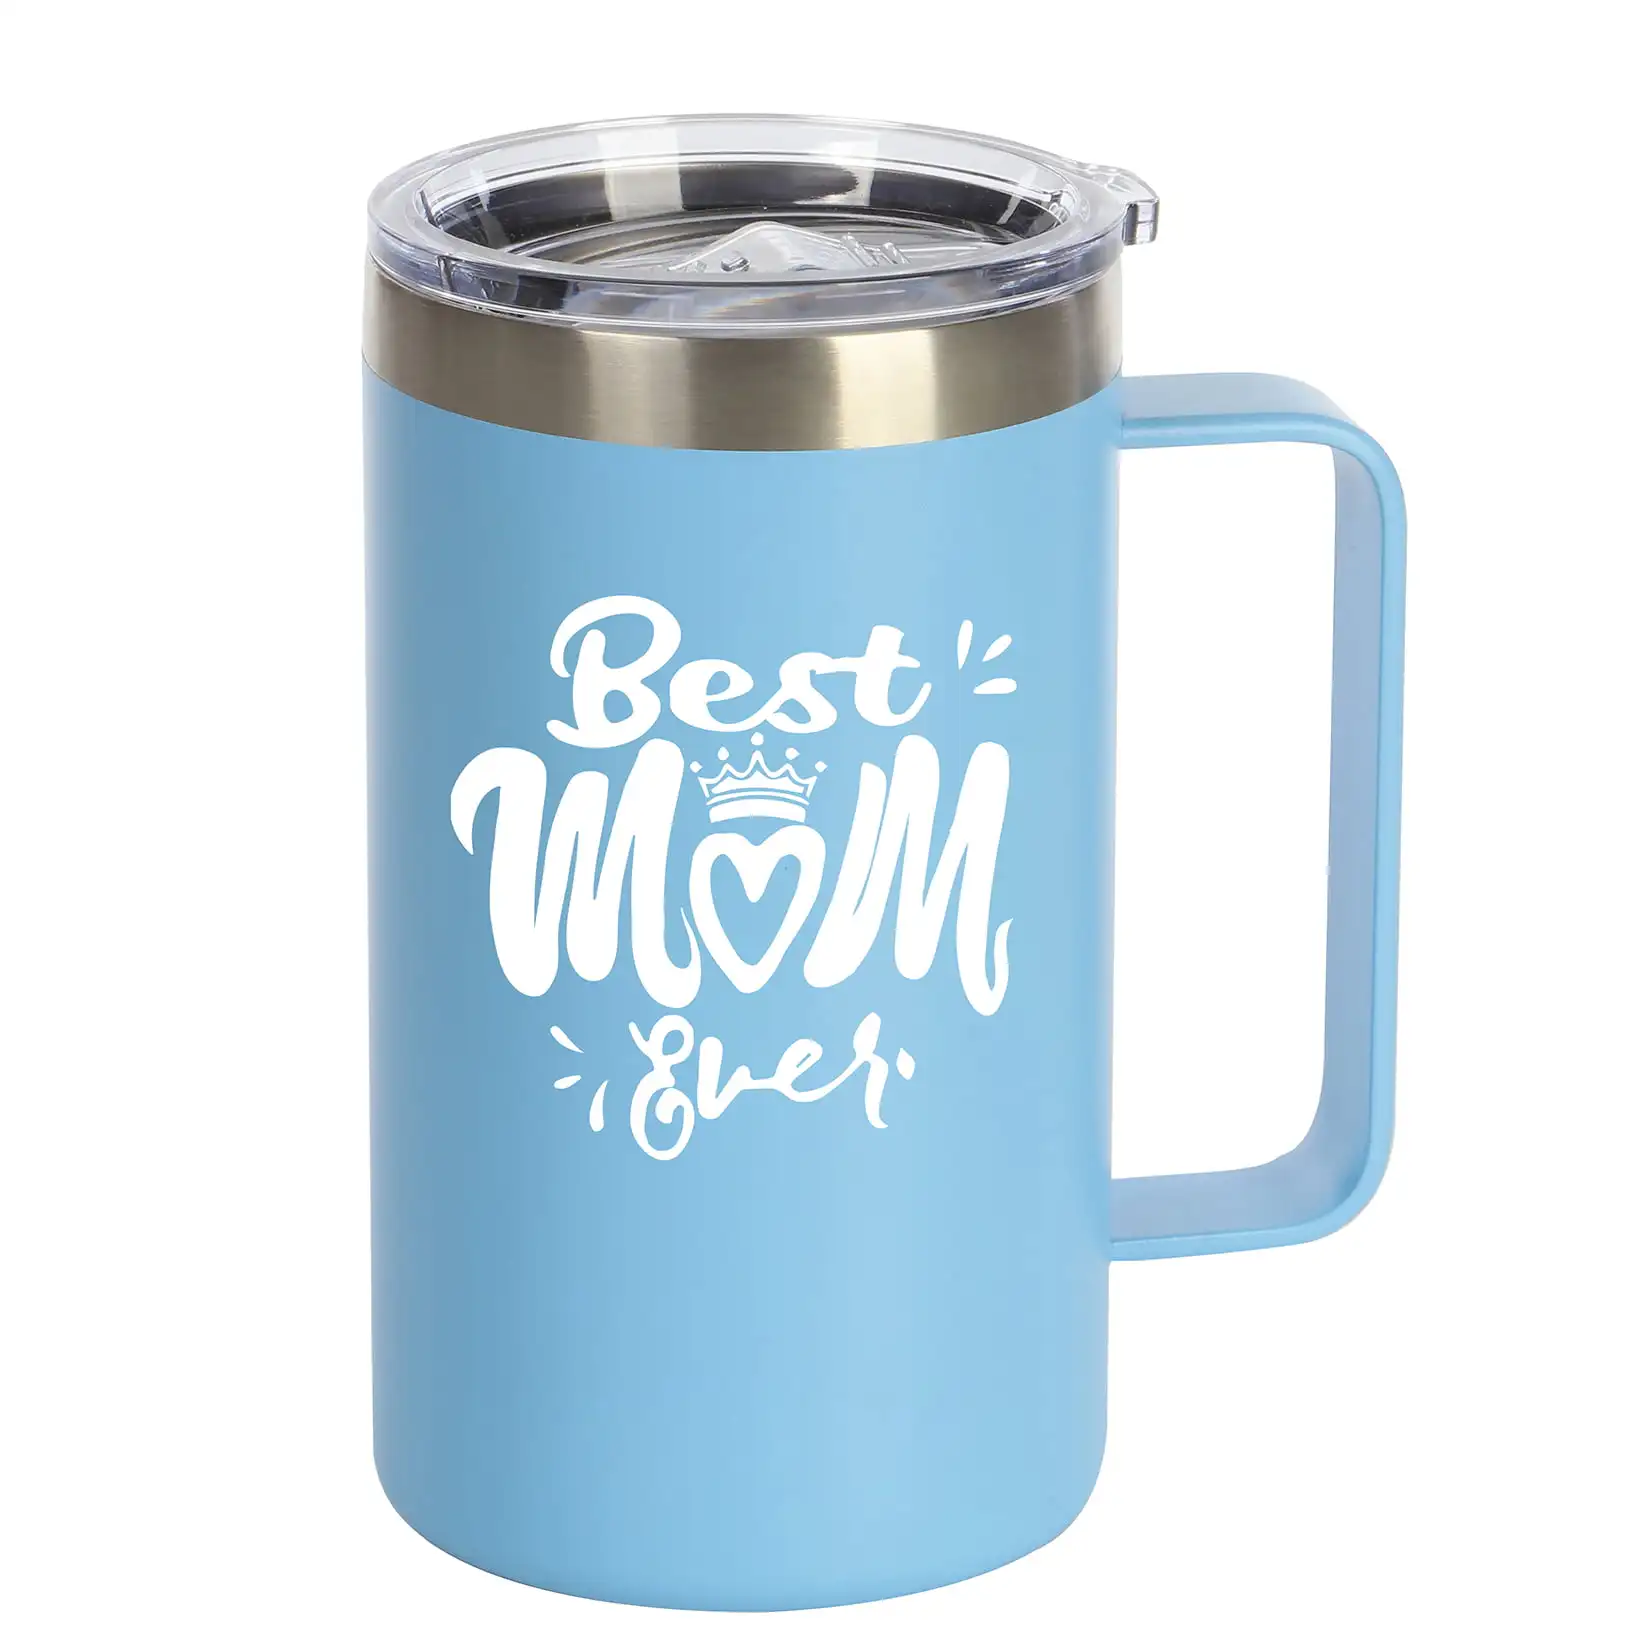 Best Mom Gift - Ezprogear 40 oz Stainless Steel Insulated Tumbler